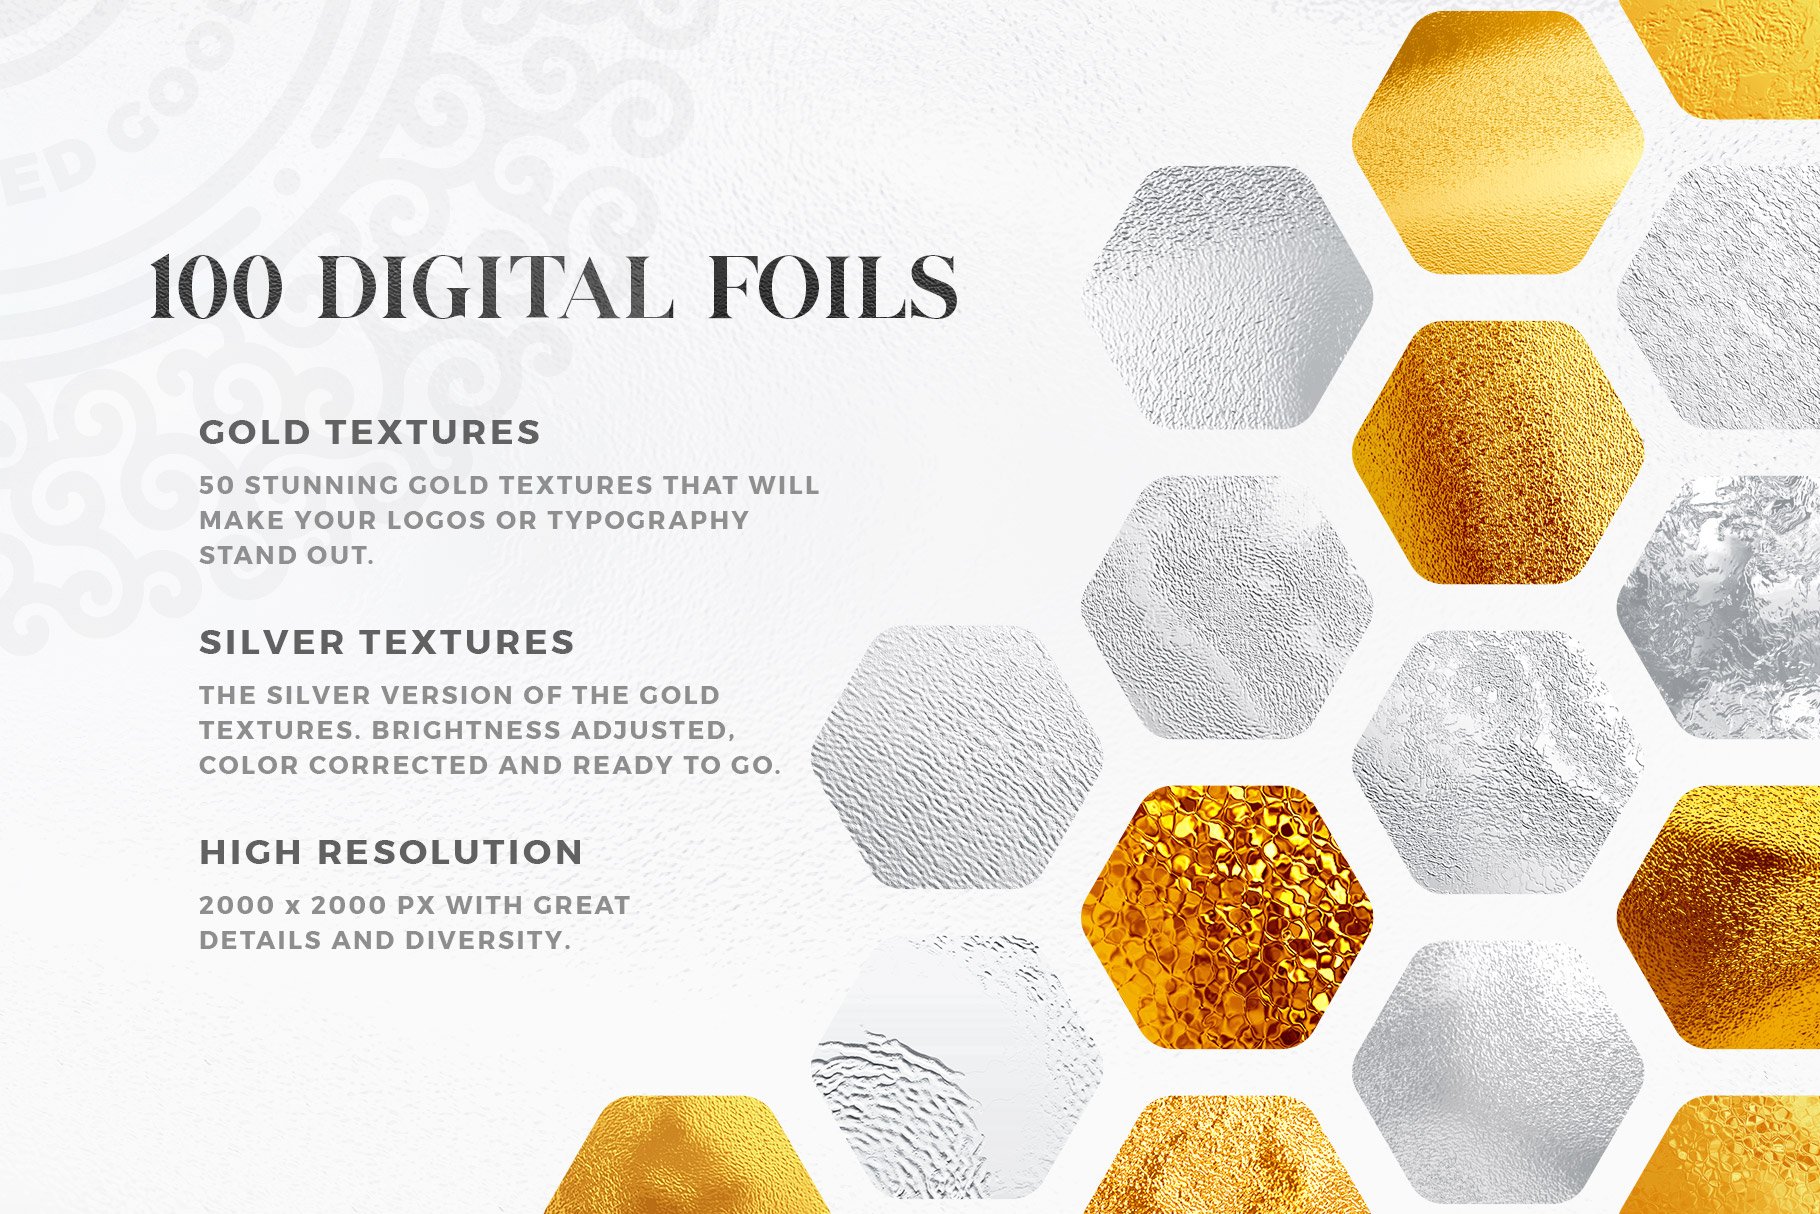 300 Gold & Silver Foil Textures